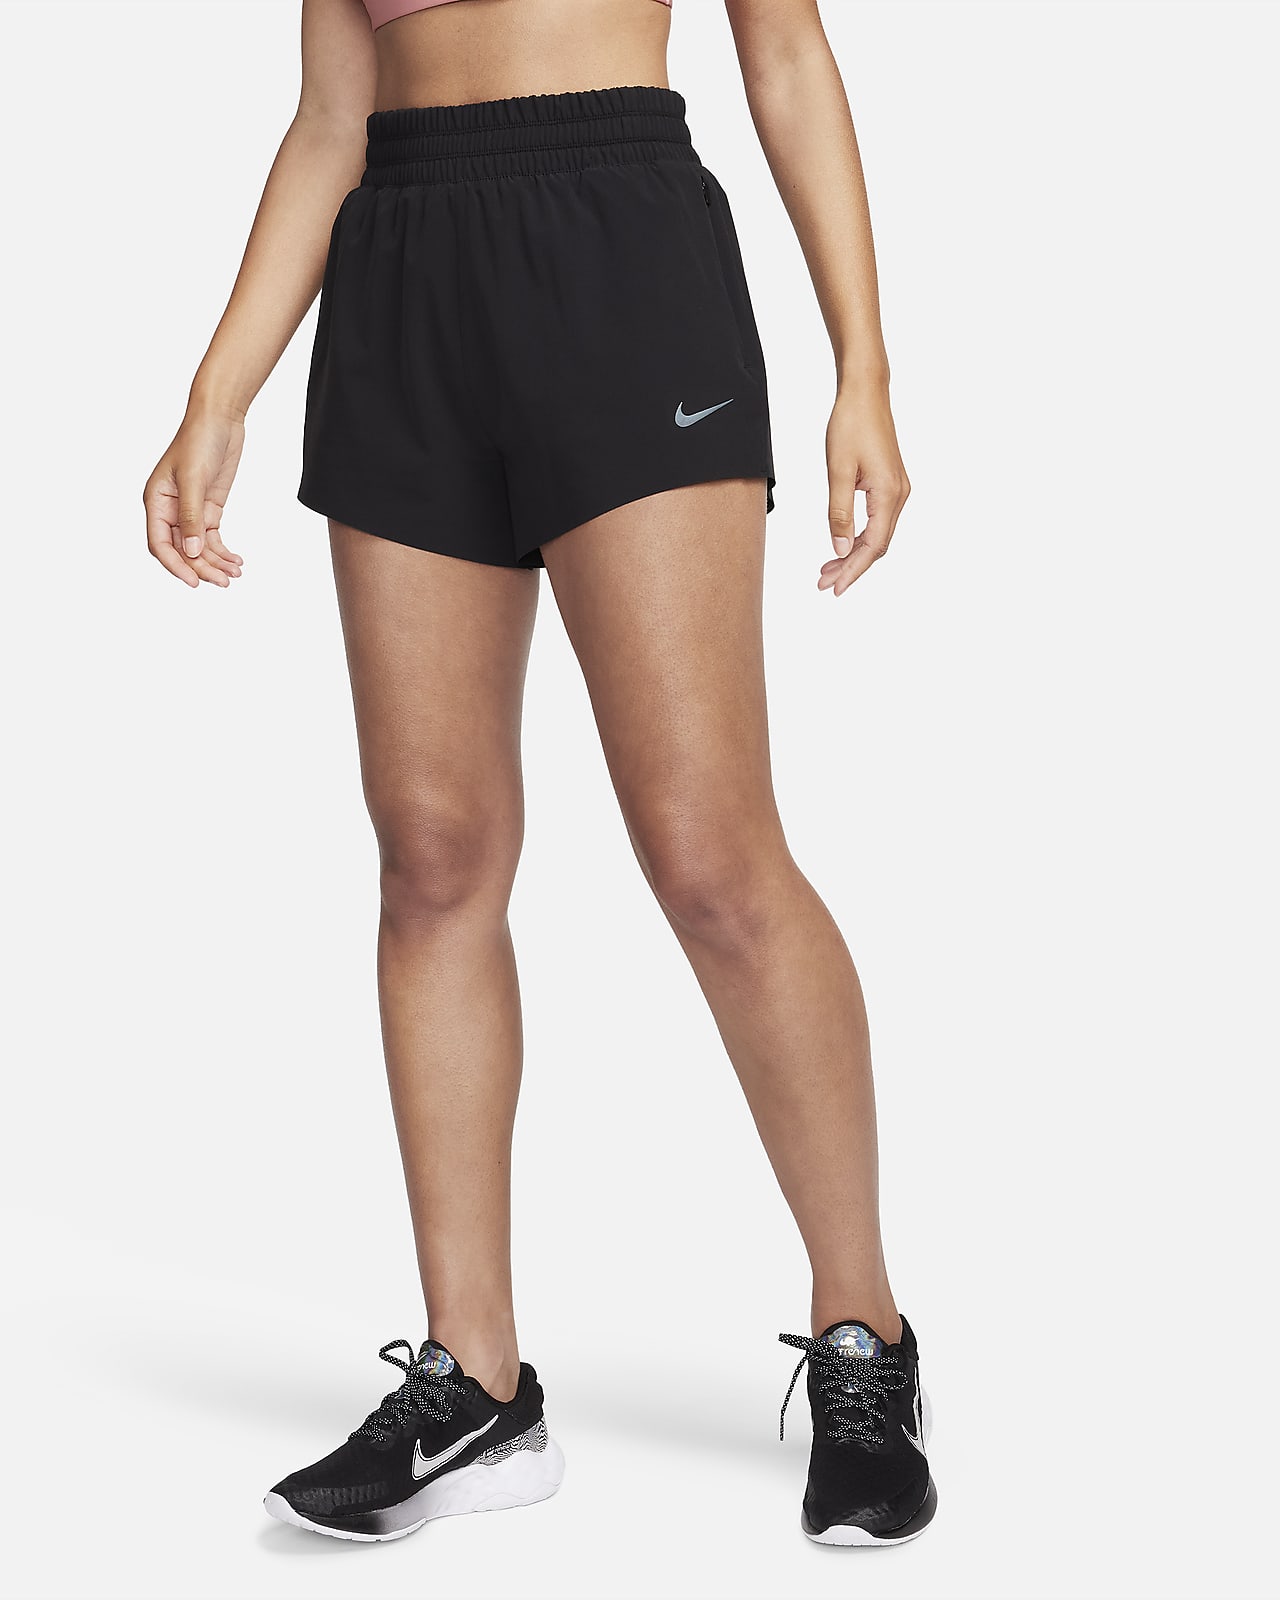 Shorts de running con forro de ropa interior de 8 cm, cintura alta y bolsillos para mujer Nike Dri-FIT Running Division 